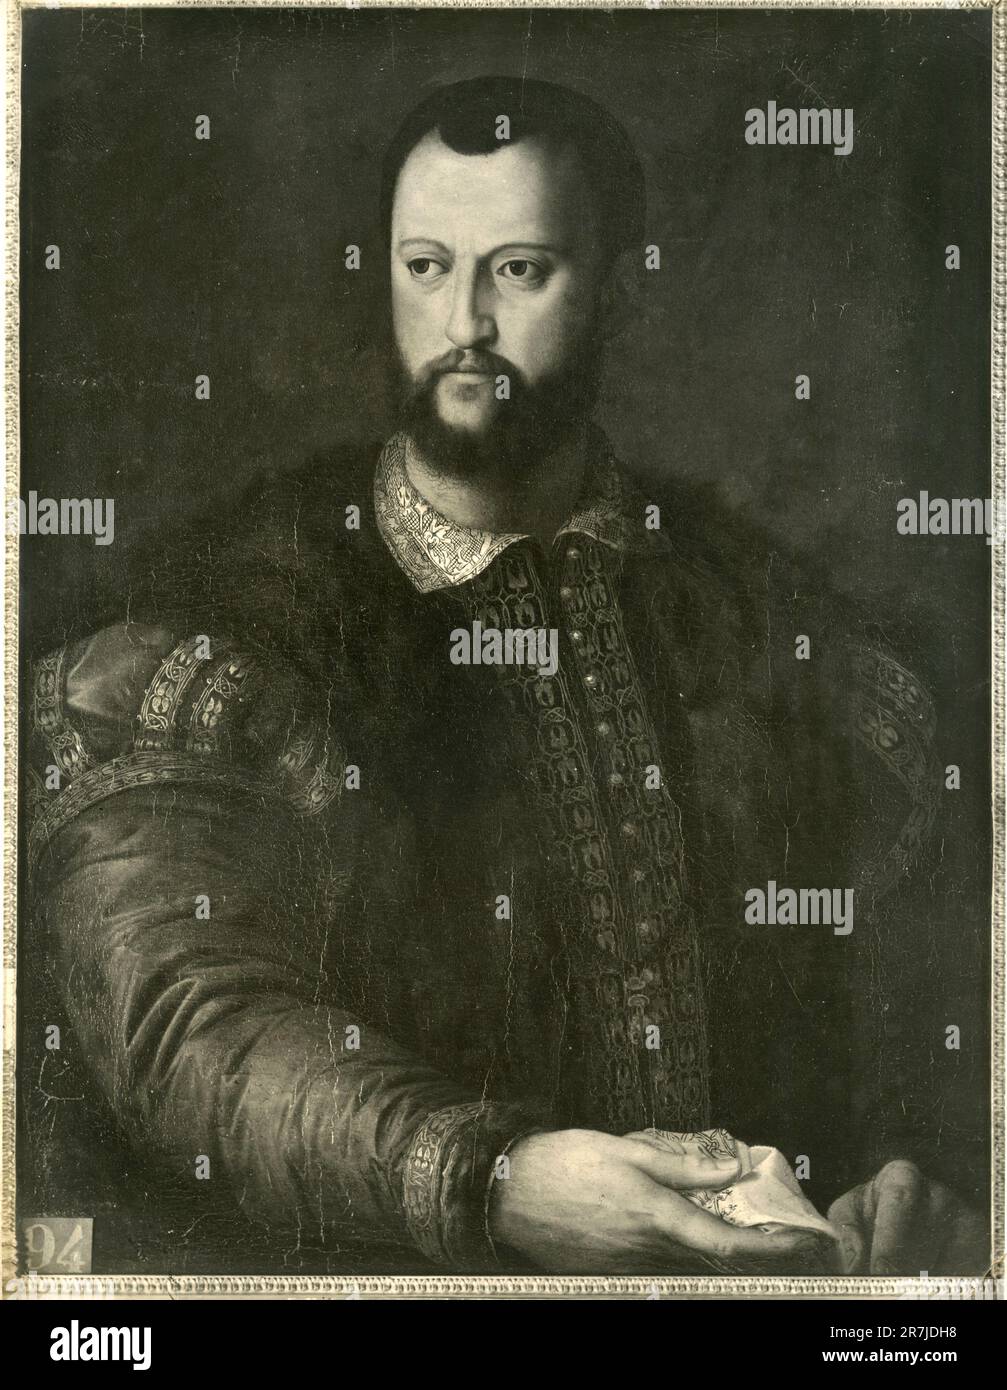 Portrait of Cosimo I de' Medici, painting by Italian artist Angelo Bronzino, Borghese Gallery, Rome, Italy 1900s Stock Photo